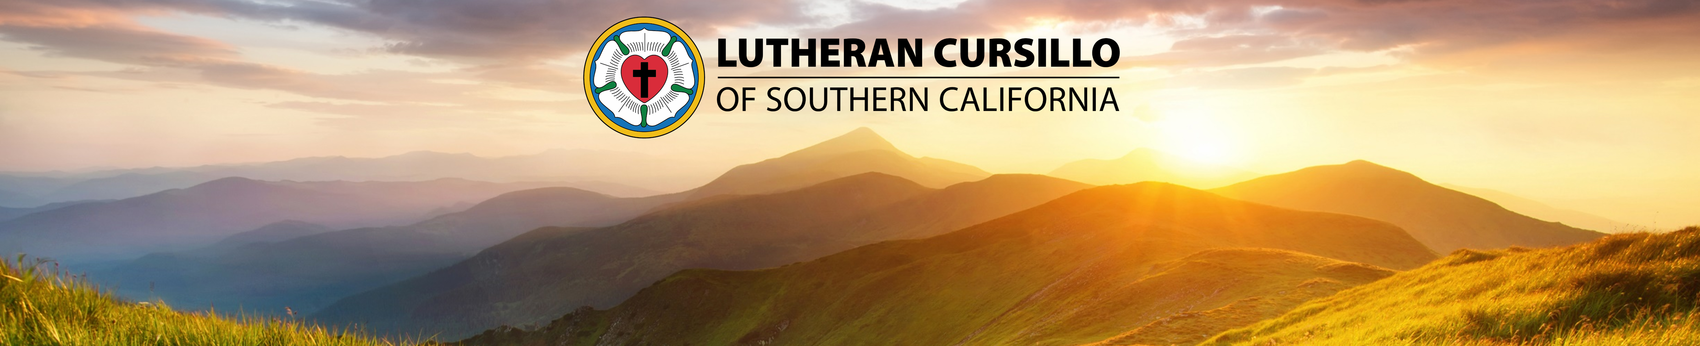 Lutheran Cursillo of Southern California